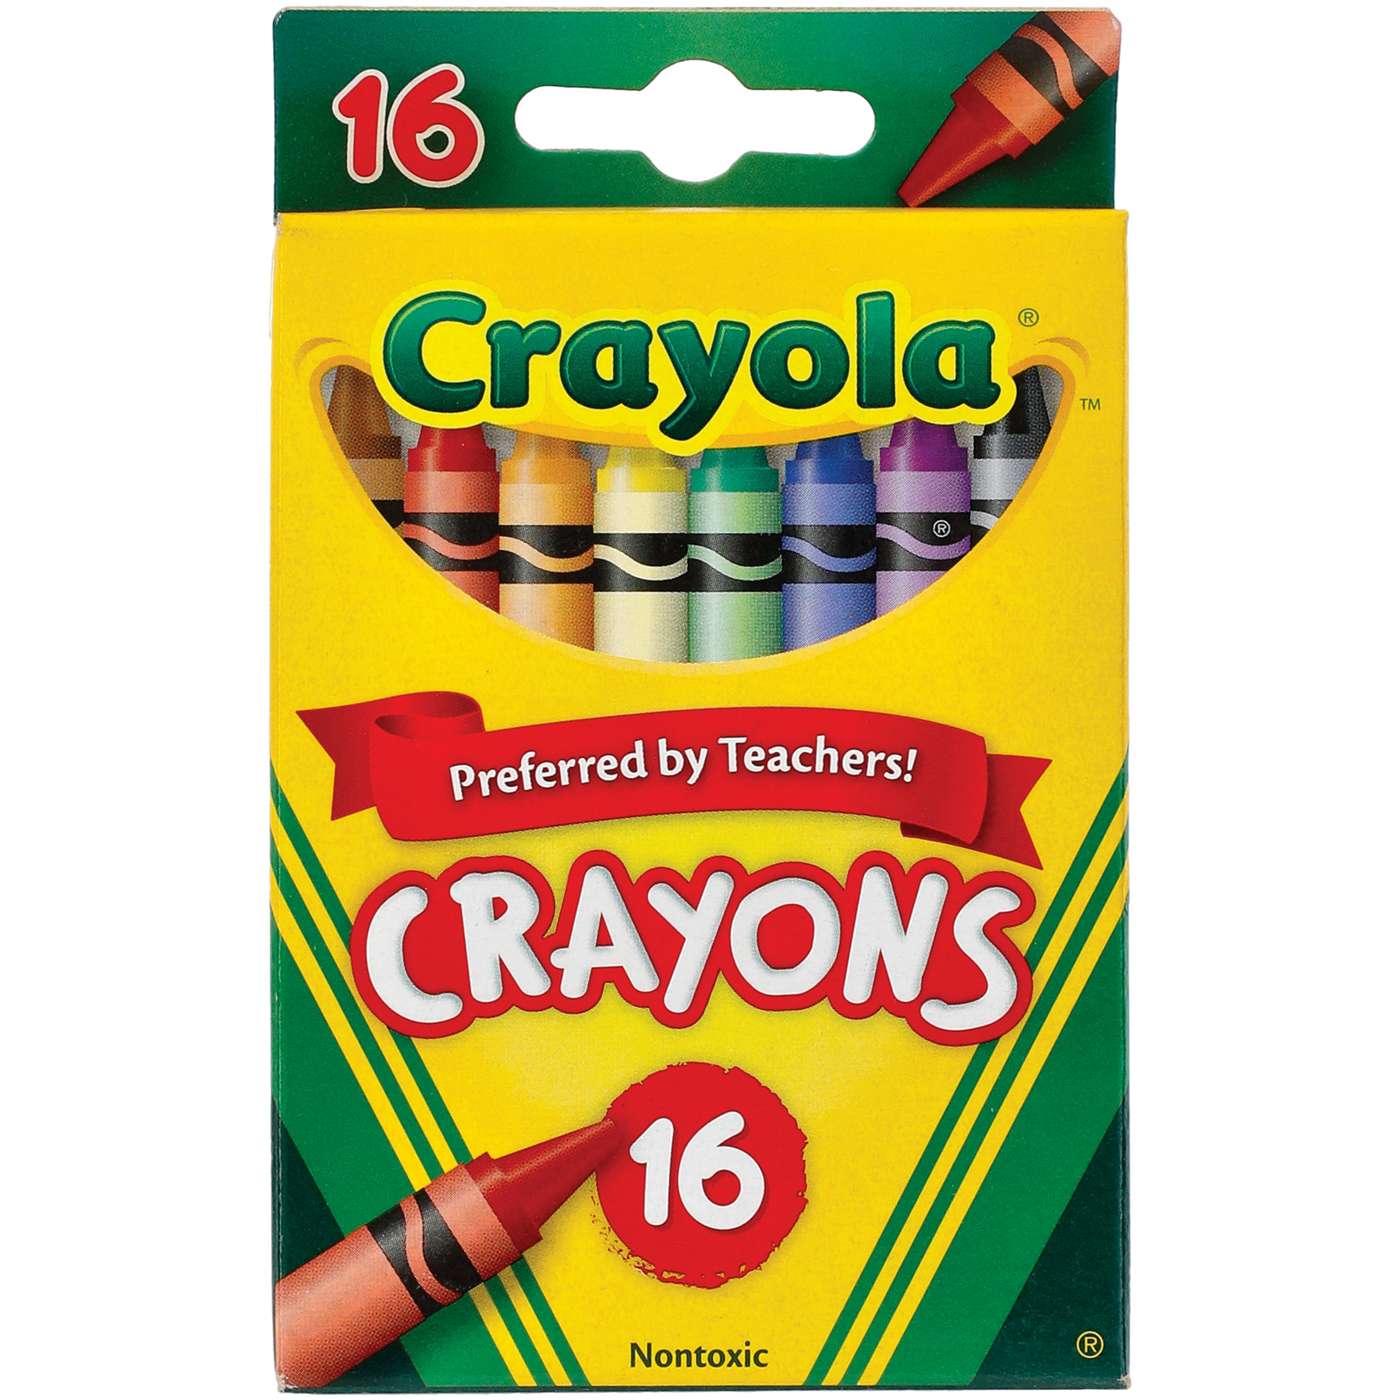 H-E-B Crayons - Classic Colors - Shop Crayons at H-E-B